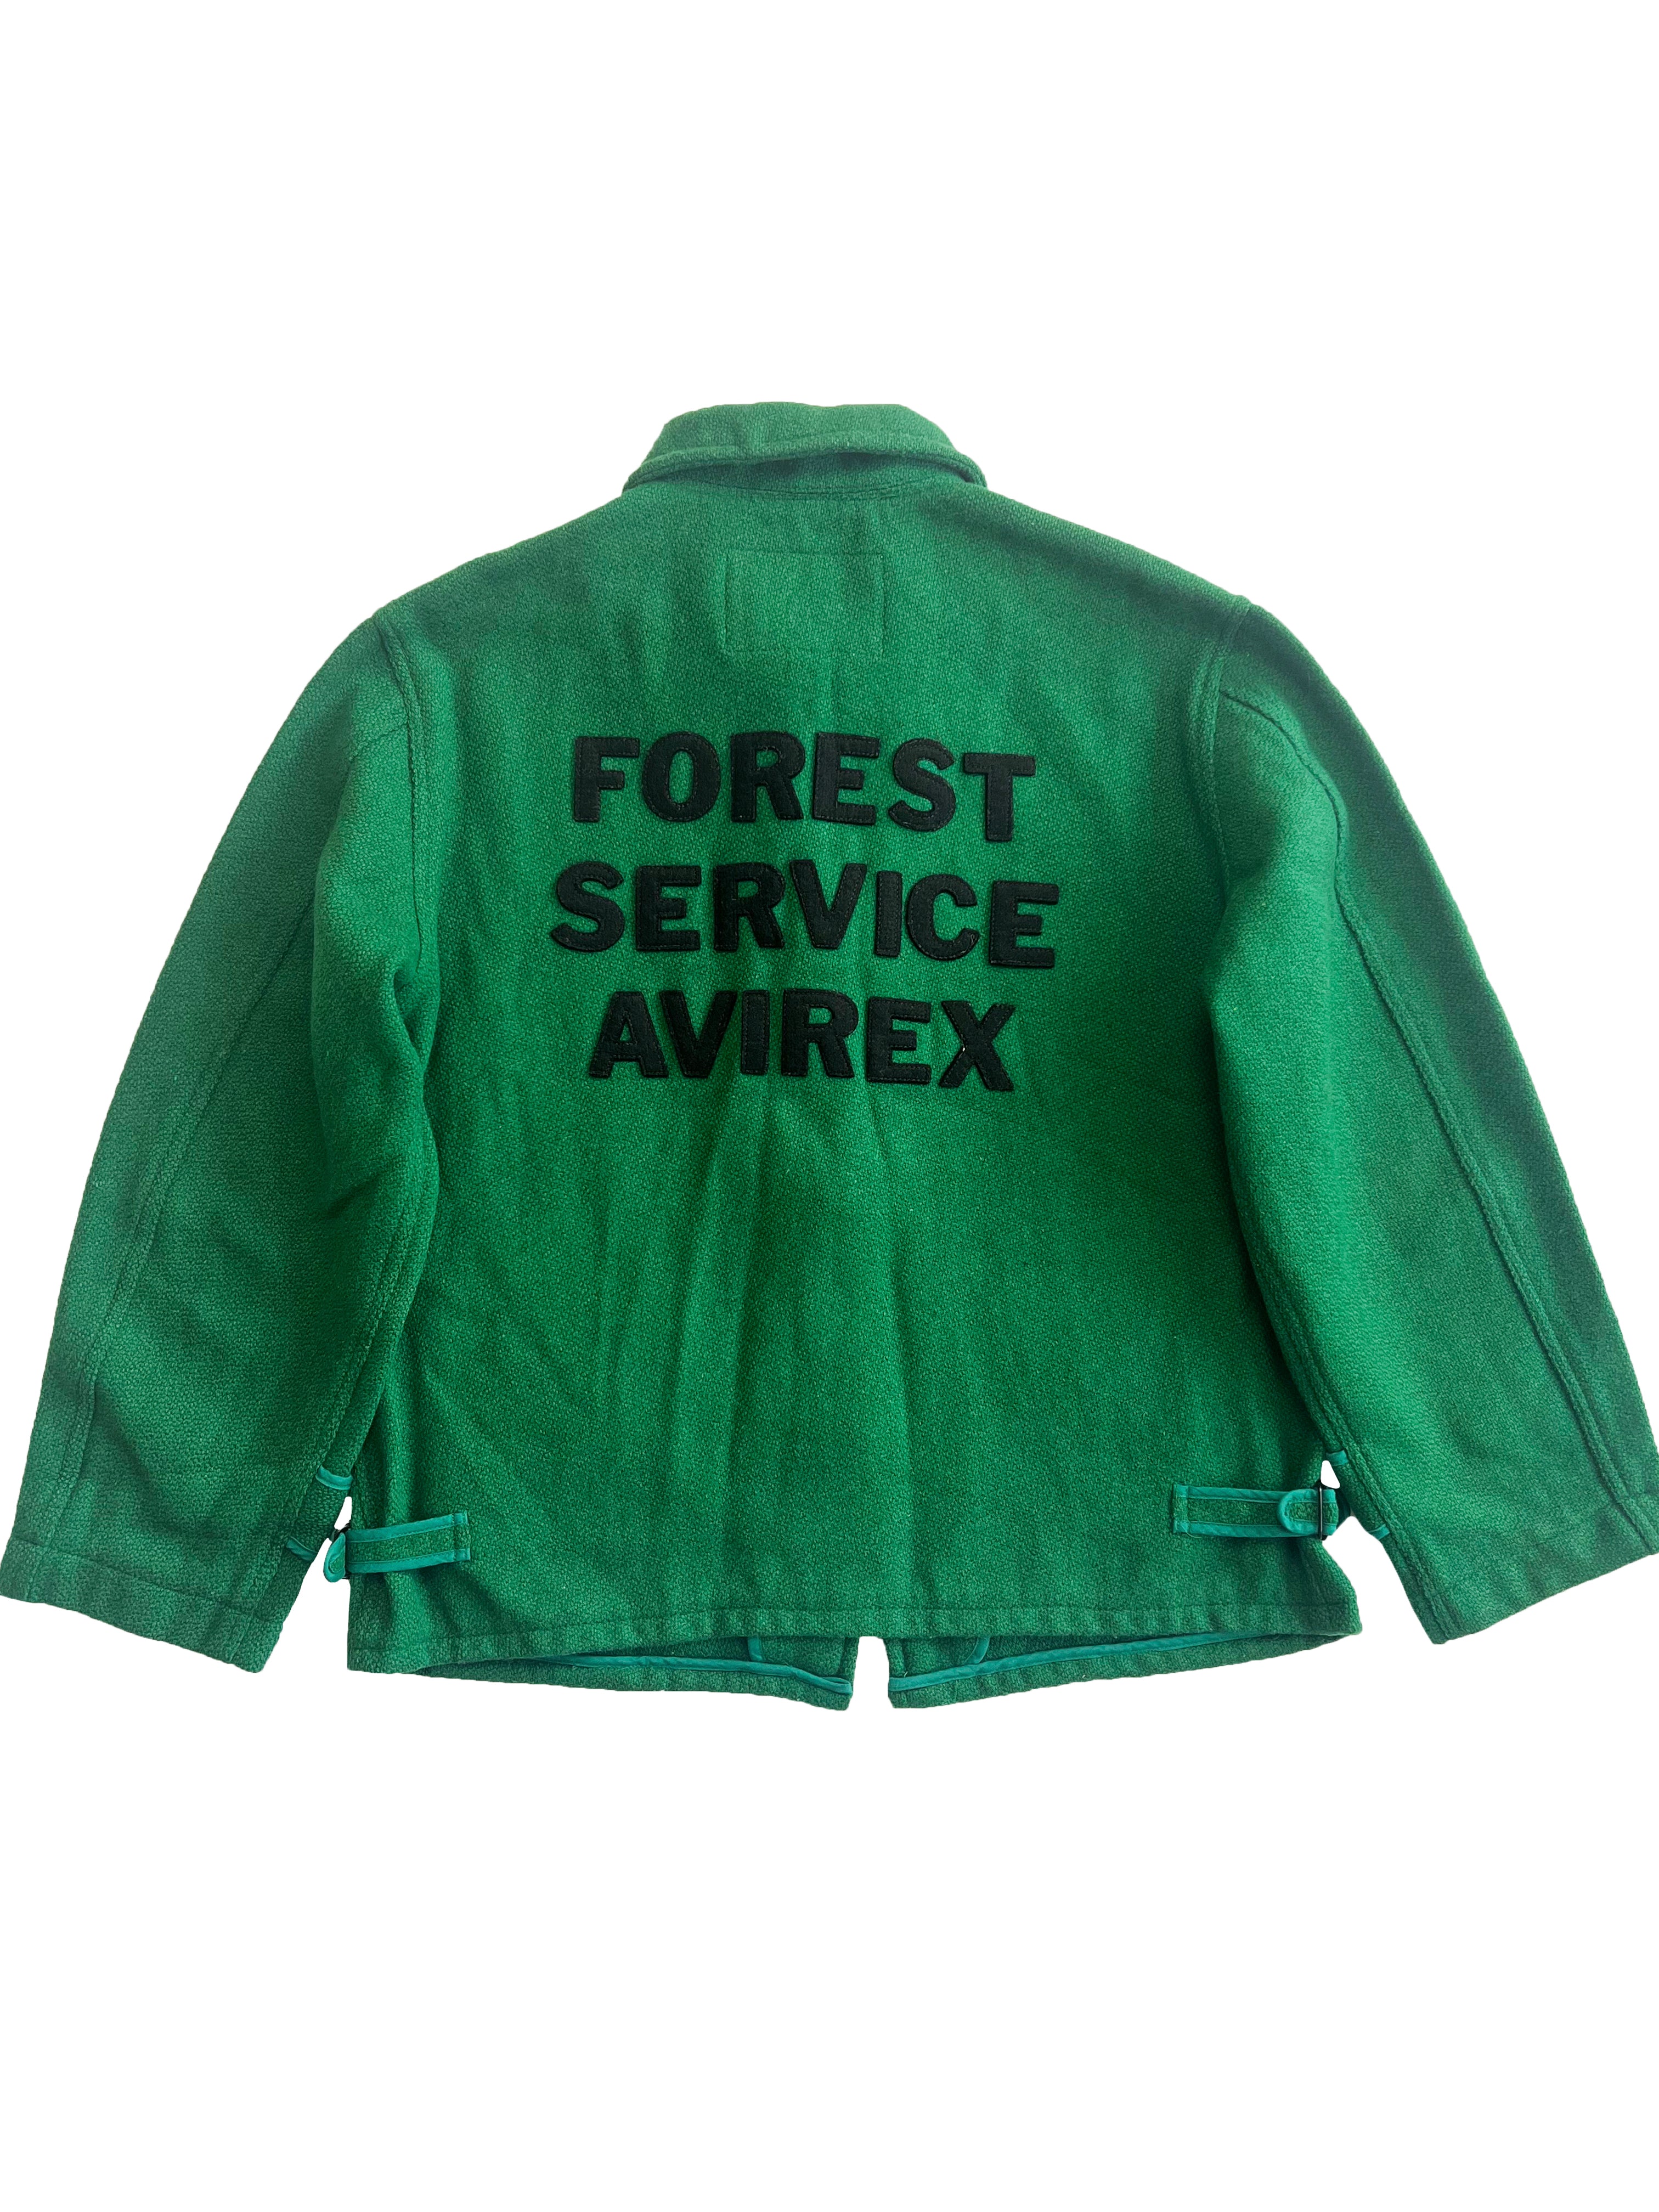 Avirex 'Forest Service' Green Jacket 80's